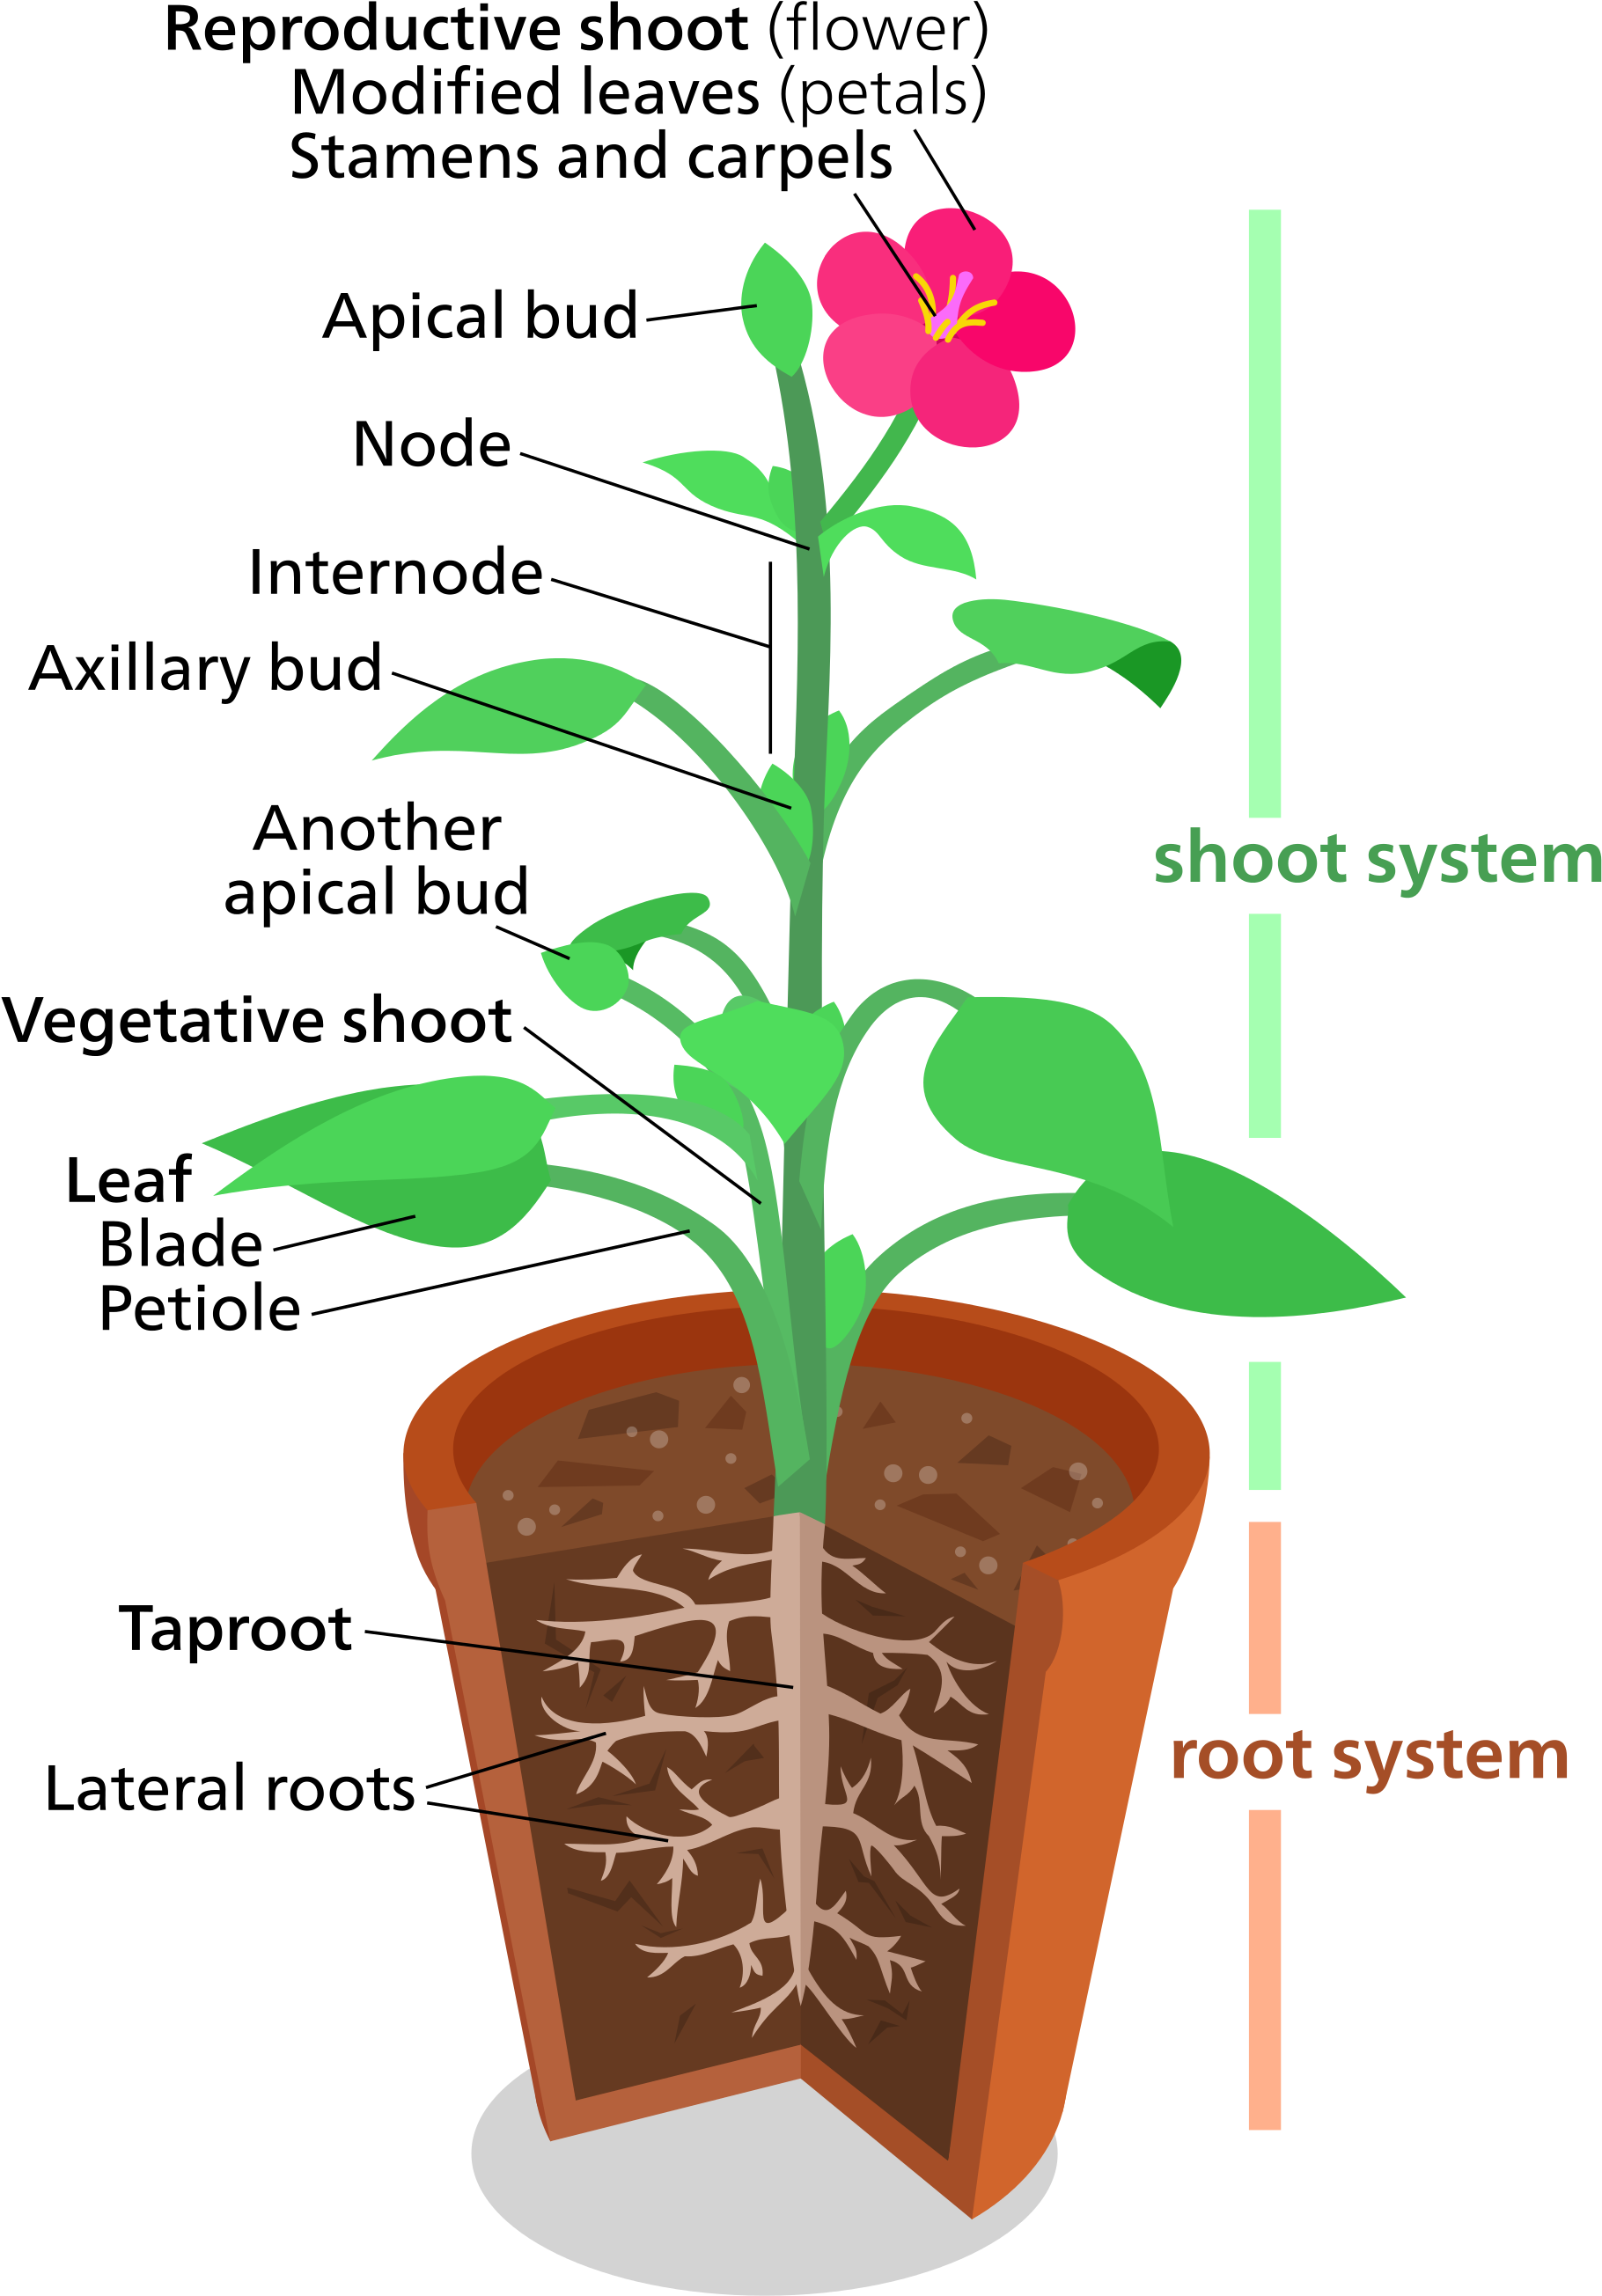 Plant body. Plant structure. Корневая и побеговая система. Структура растения. Корневая и побеговая системы растений.